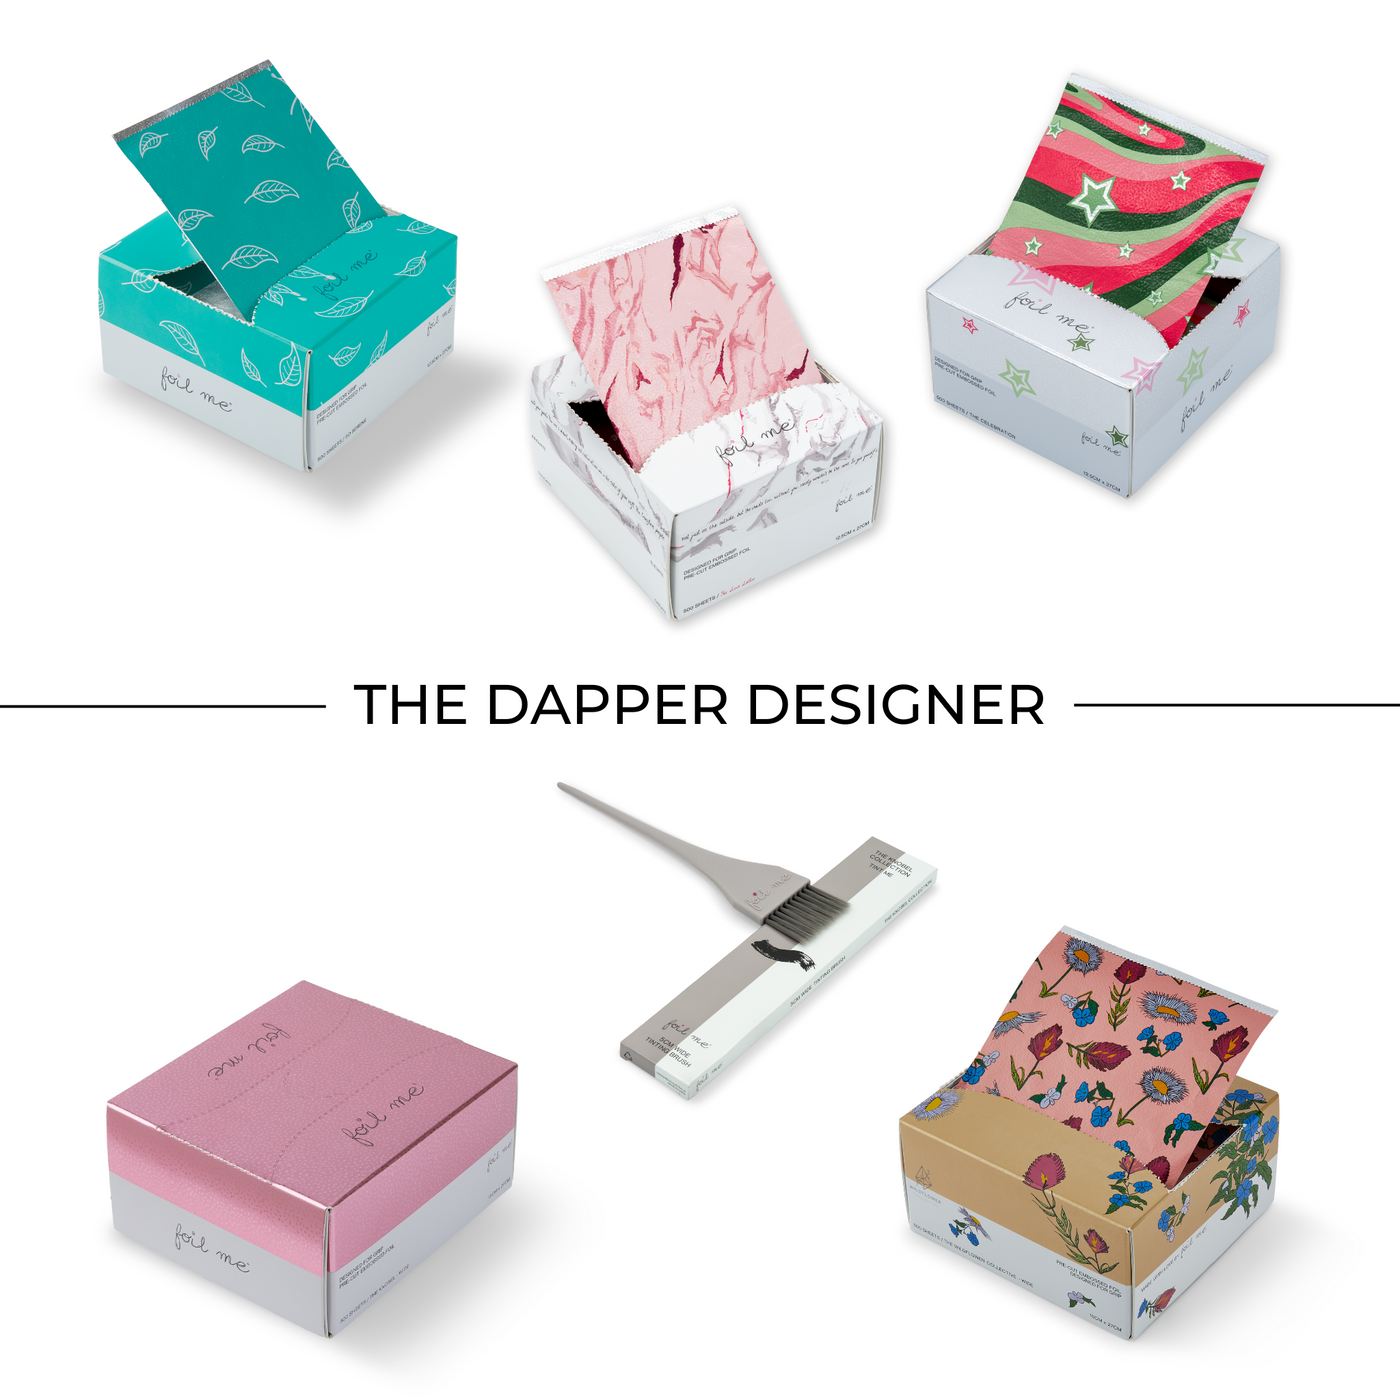 The Dapper Designer